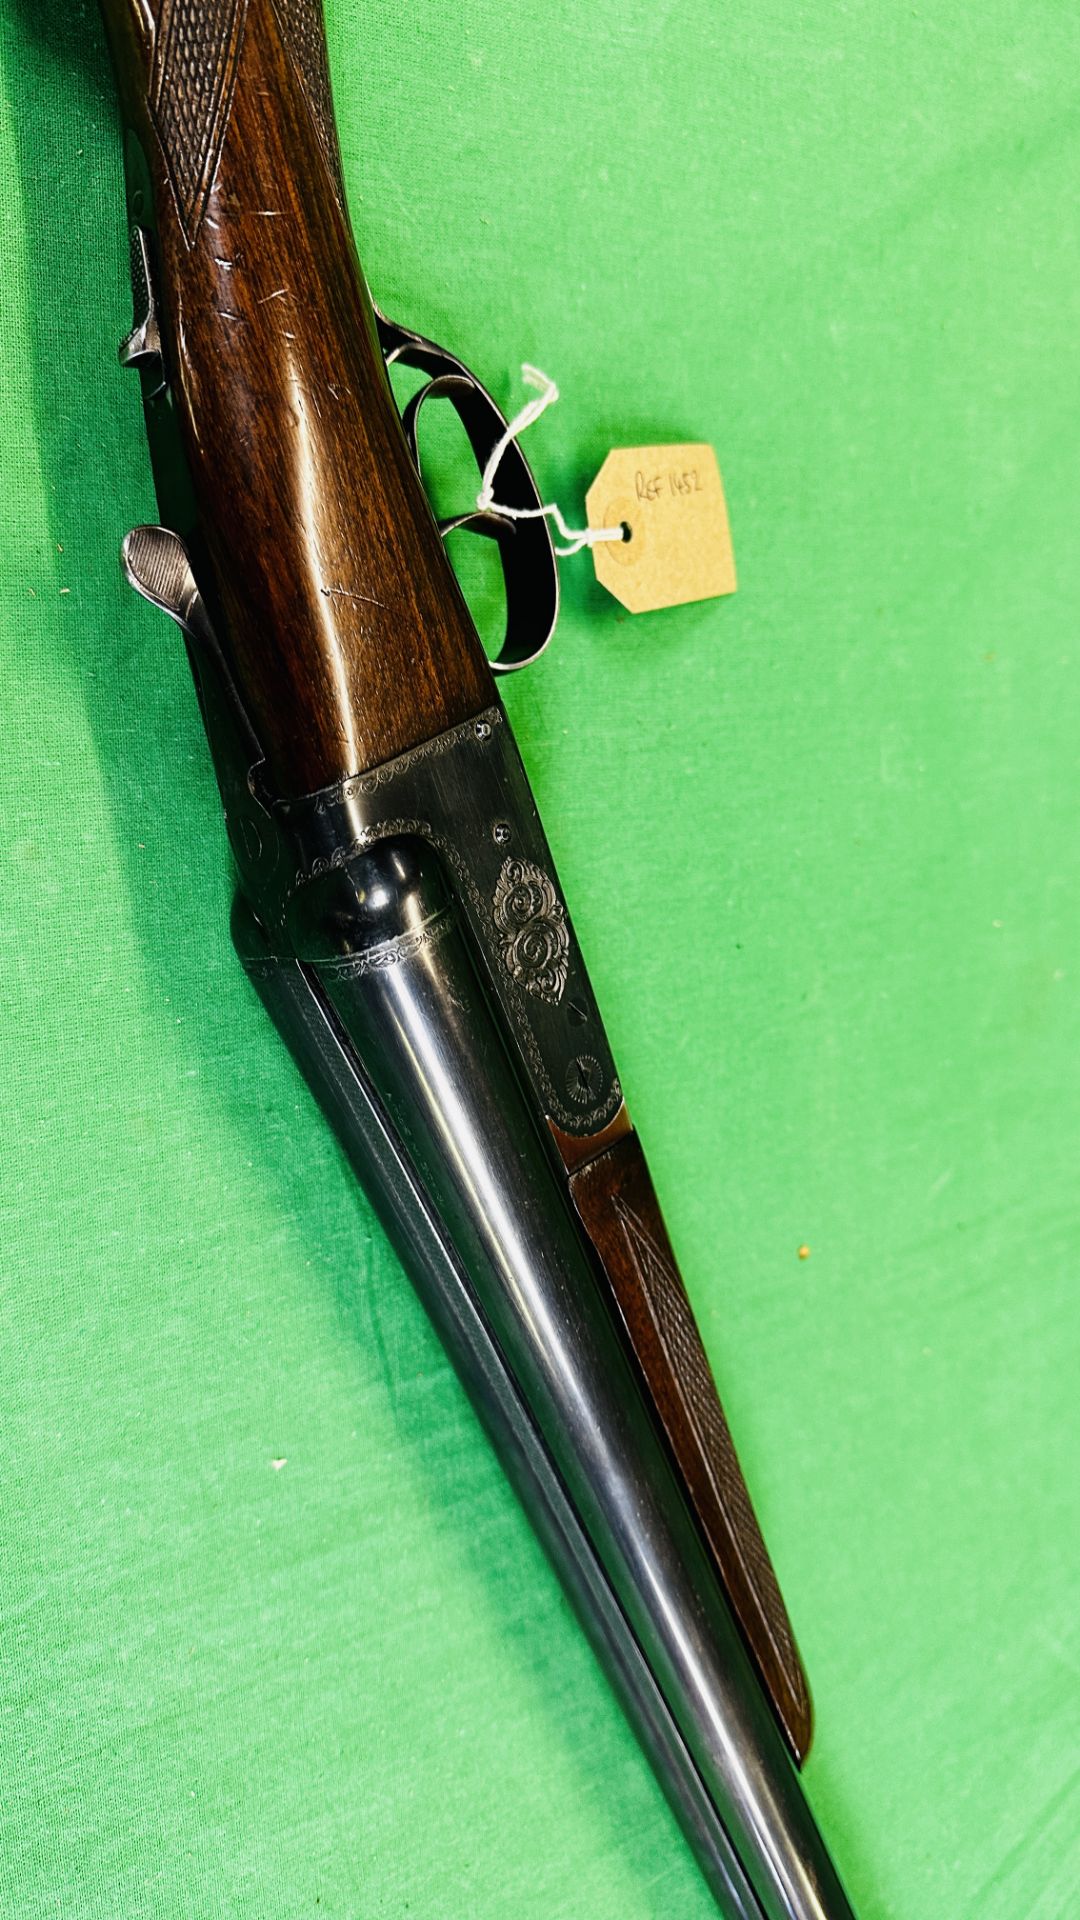 ZABALA 12 GAUGE SIDE BY SIDE SHOTGUN #192092 WITH GREEN PADDED GUN SLEEVE - (REF: 1452) - (ALL GUNS - Image 14 of 16